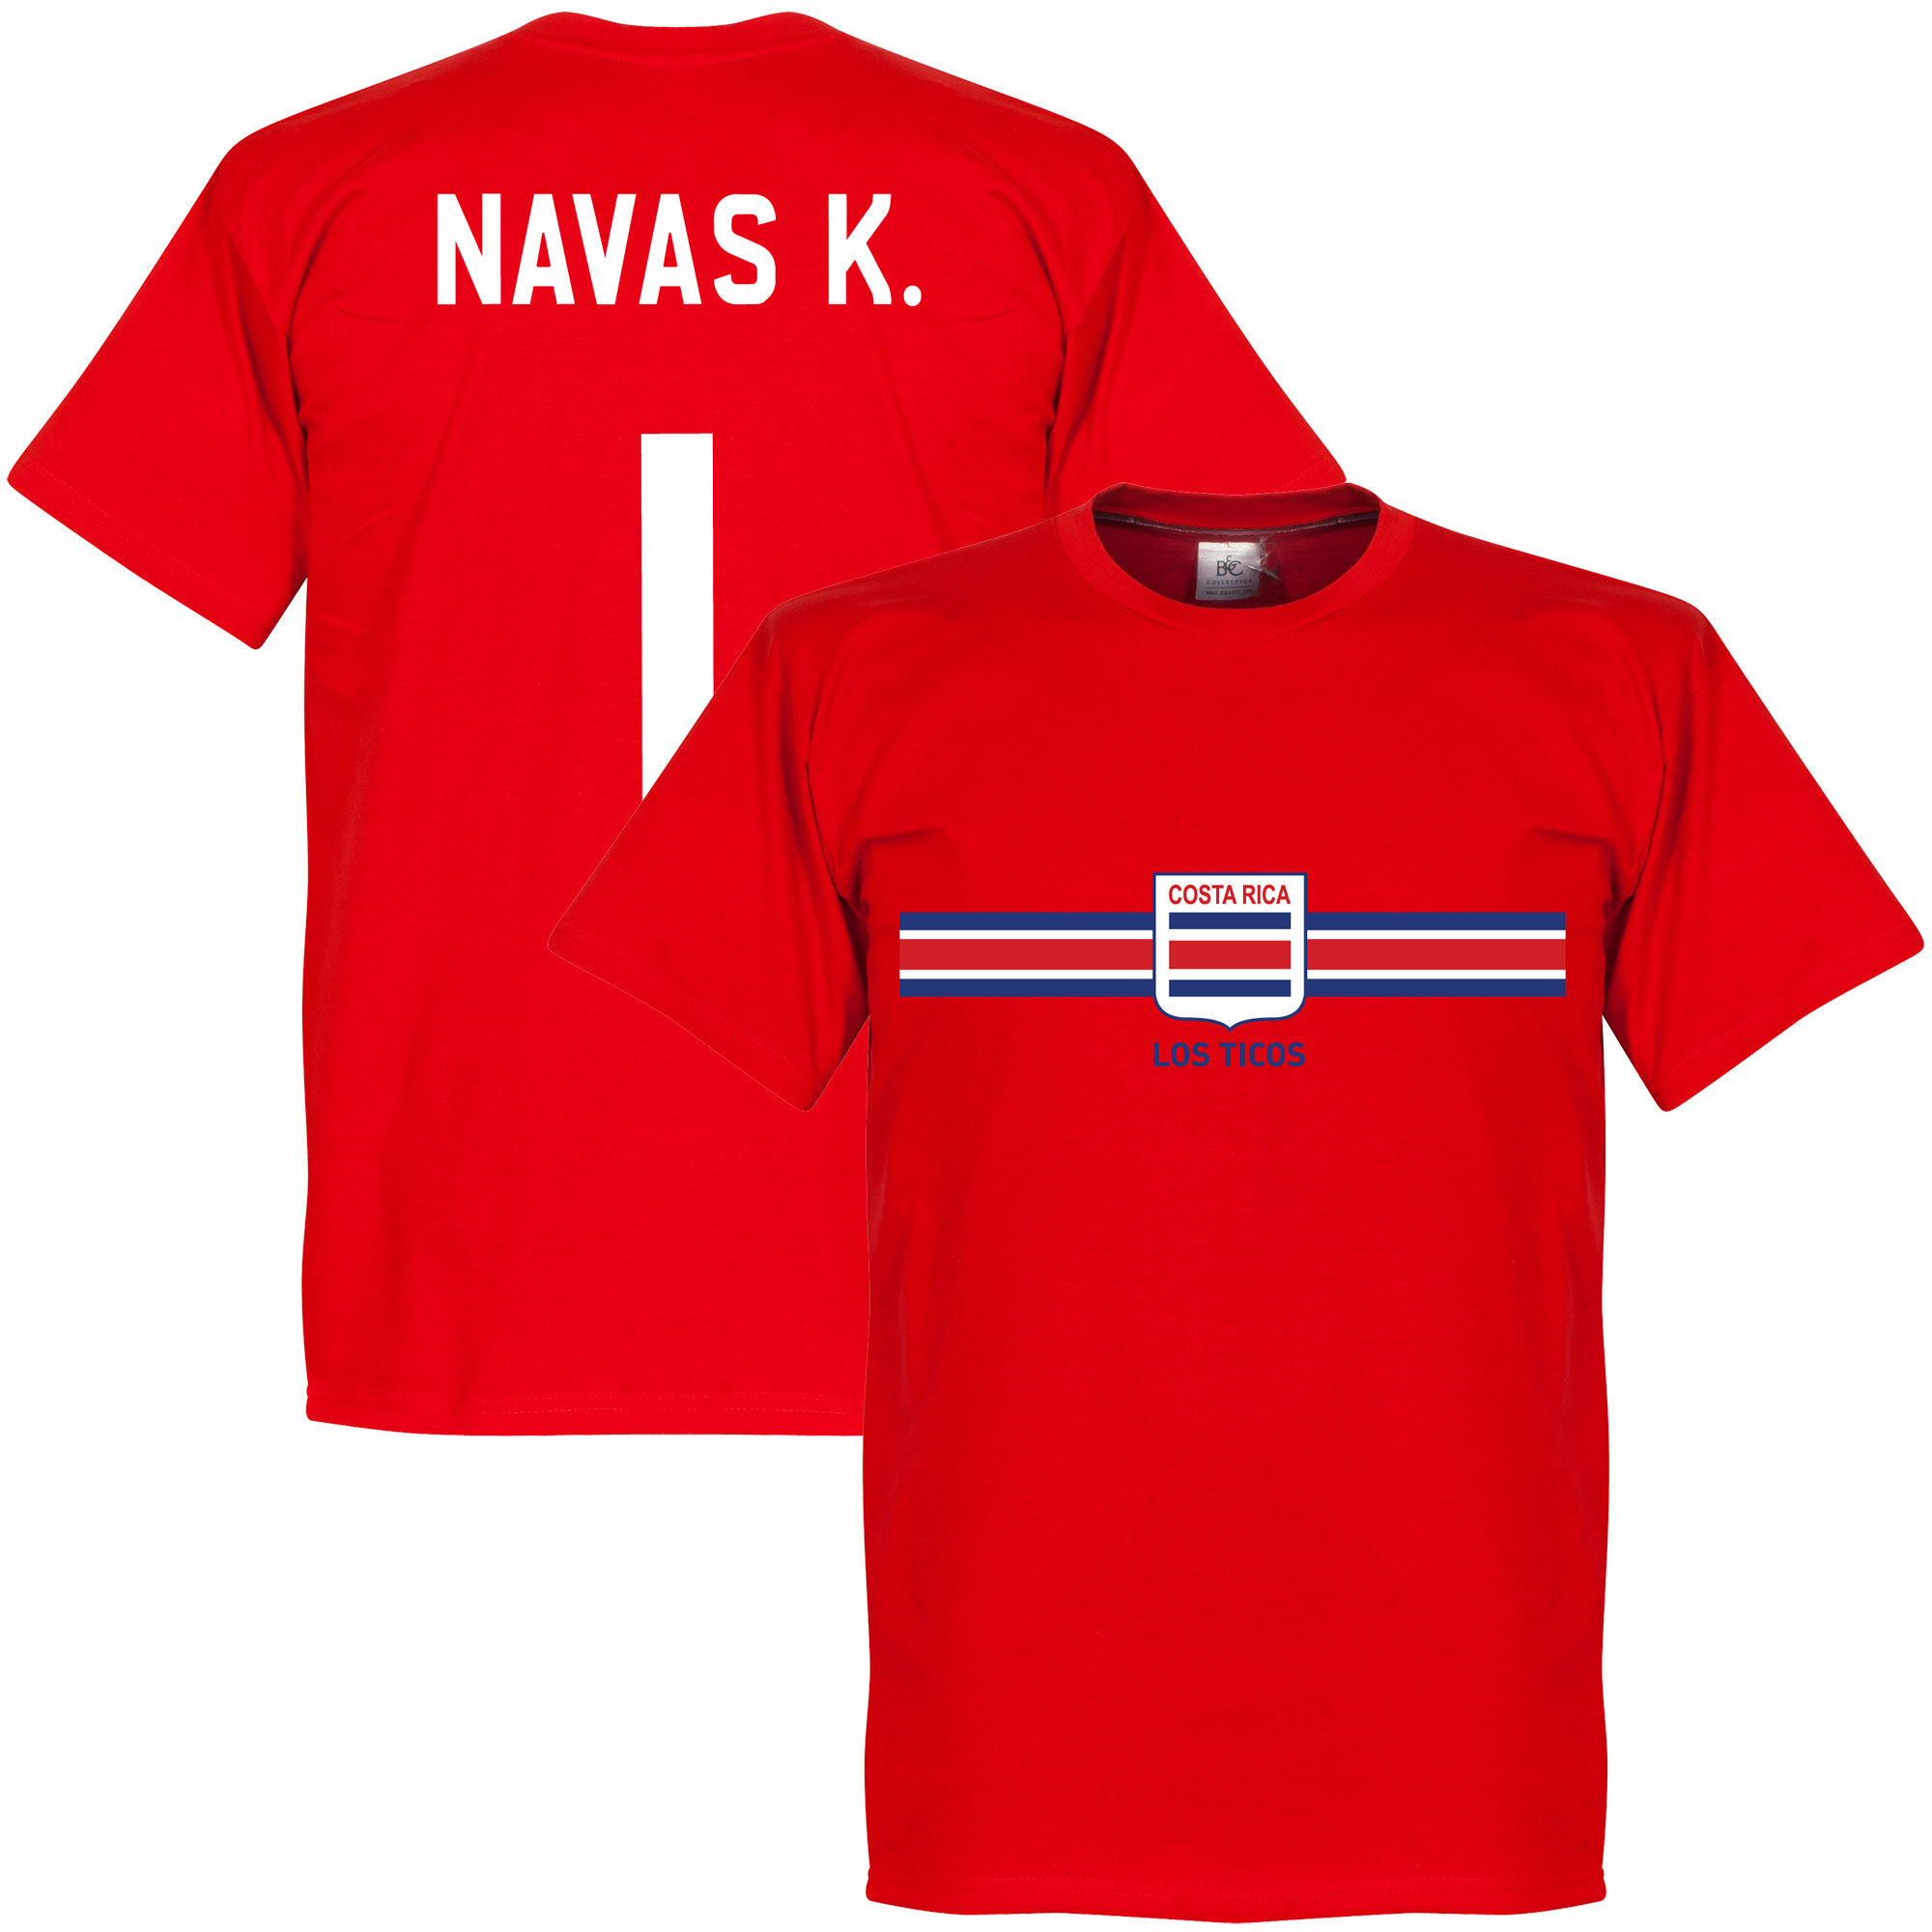 Kostarika - Tričko - červené, Keylor Navas